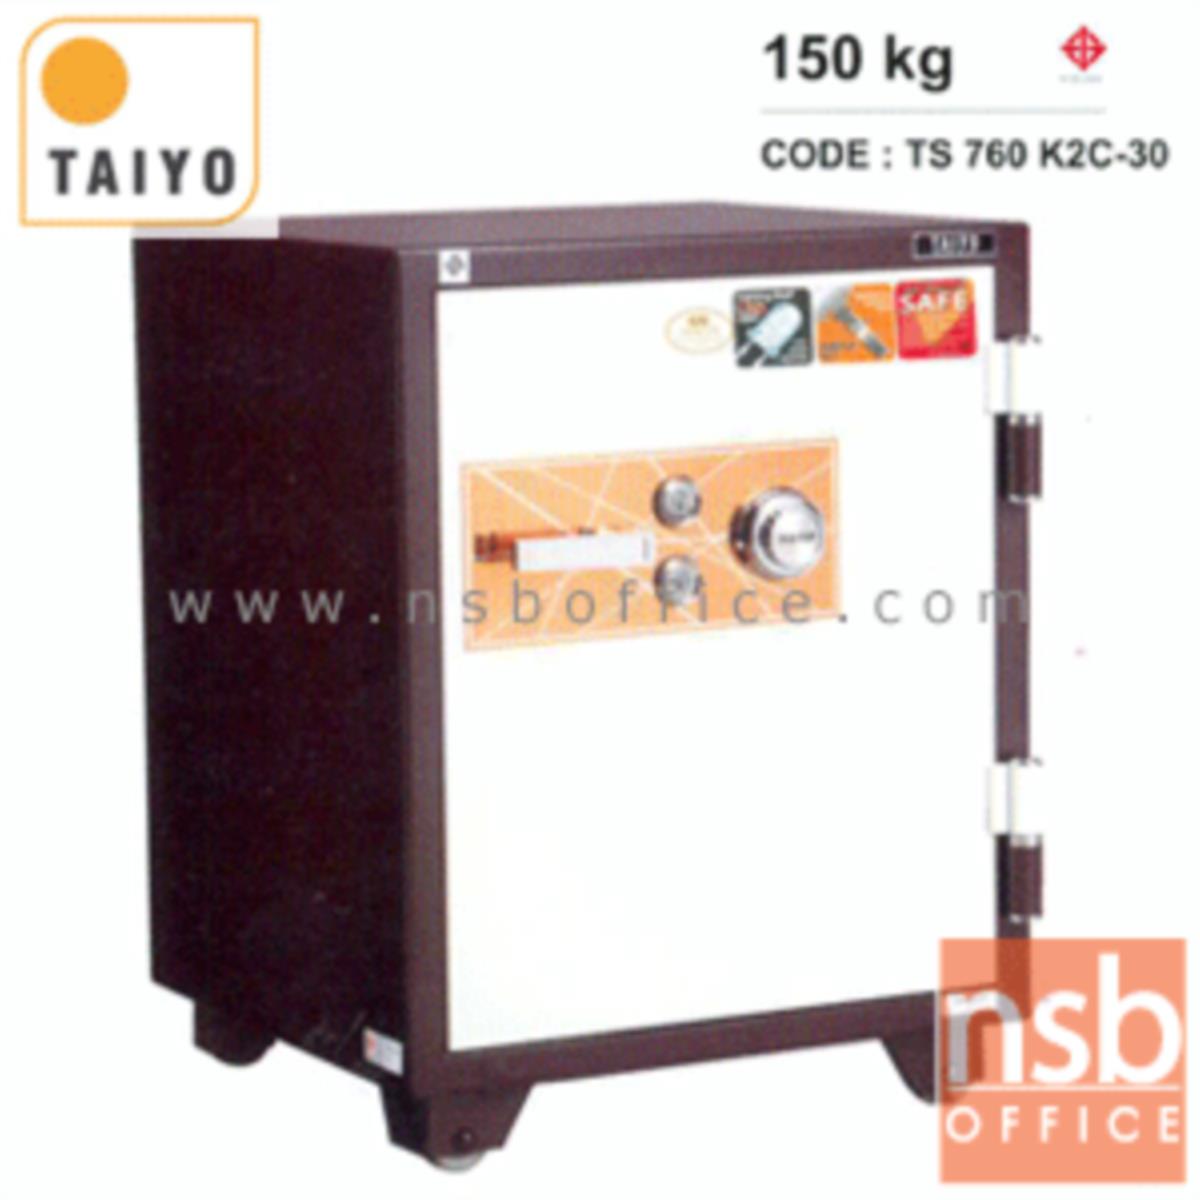 F01A036:ตู้เซฟ TAIYO รุ่น 150 กก. 2 กุญแจ 1 รหัส (TS760K2C-30)   